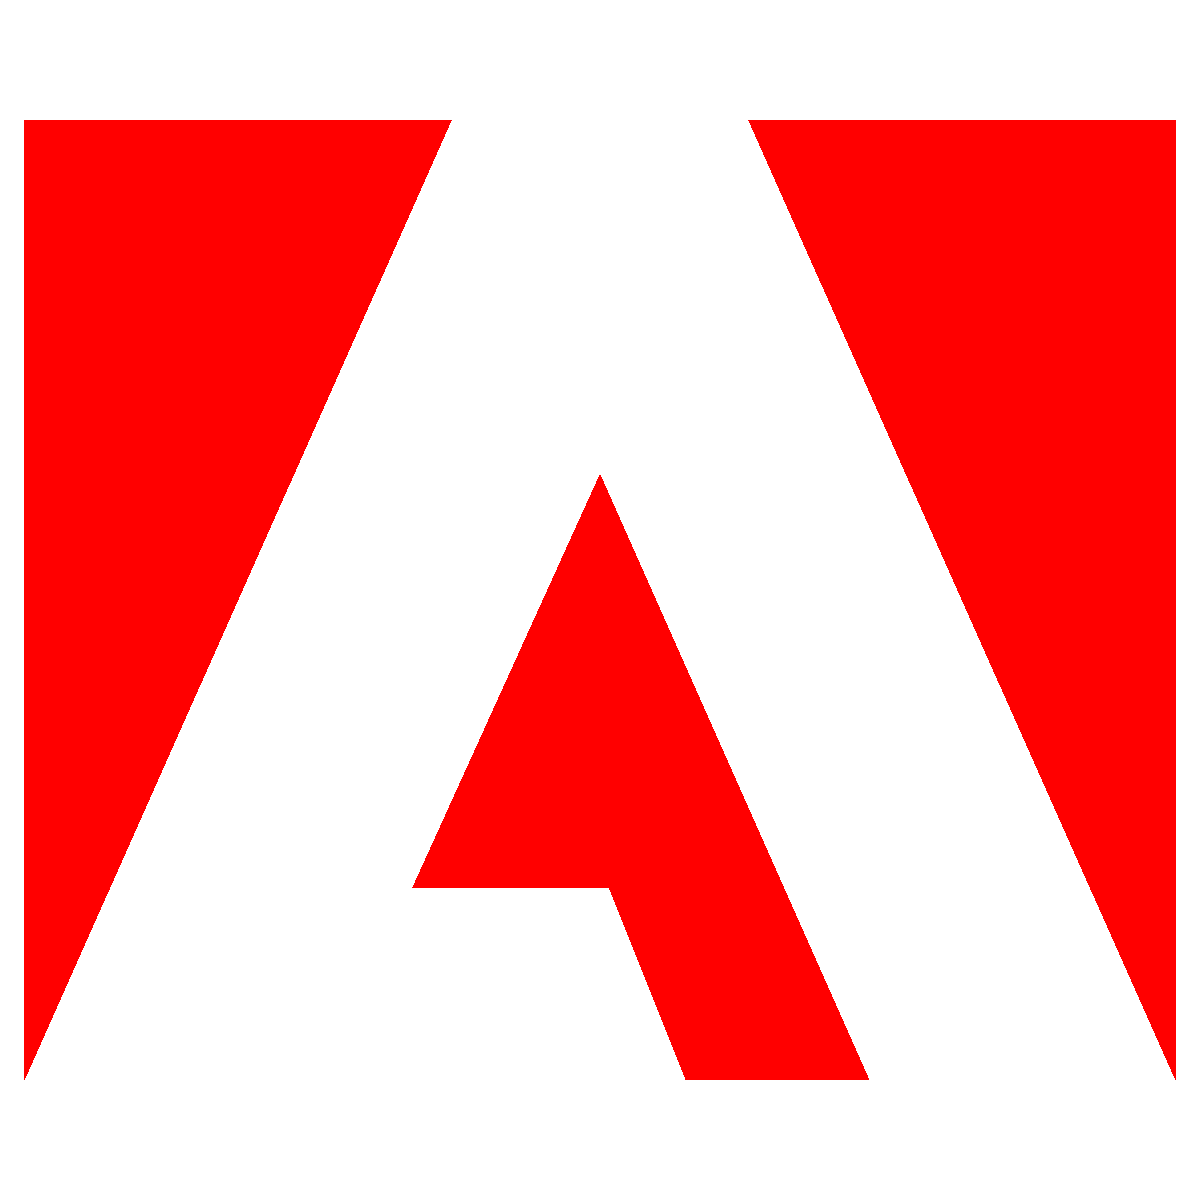 Adobe png. Логотип адобе. Adobe логотип PNG. Adobe Systems. Логотип компании Adobe Systems.